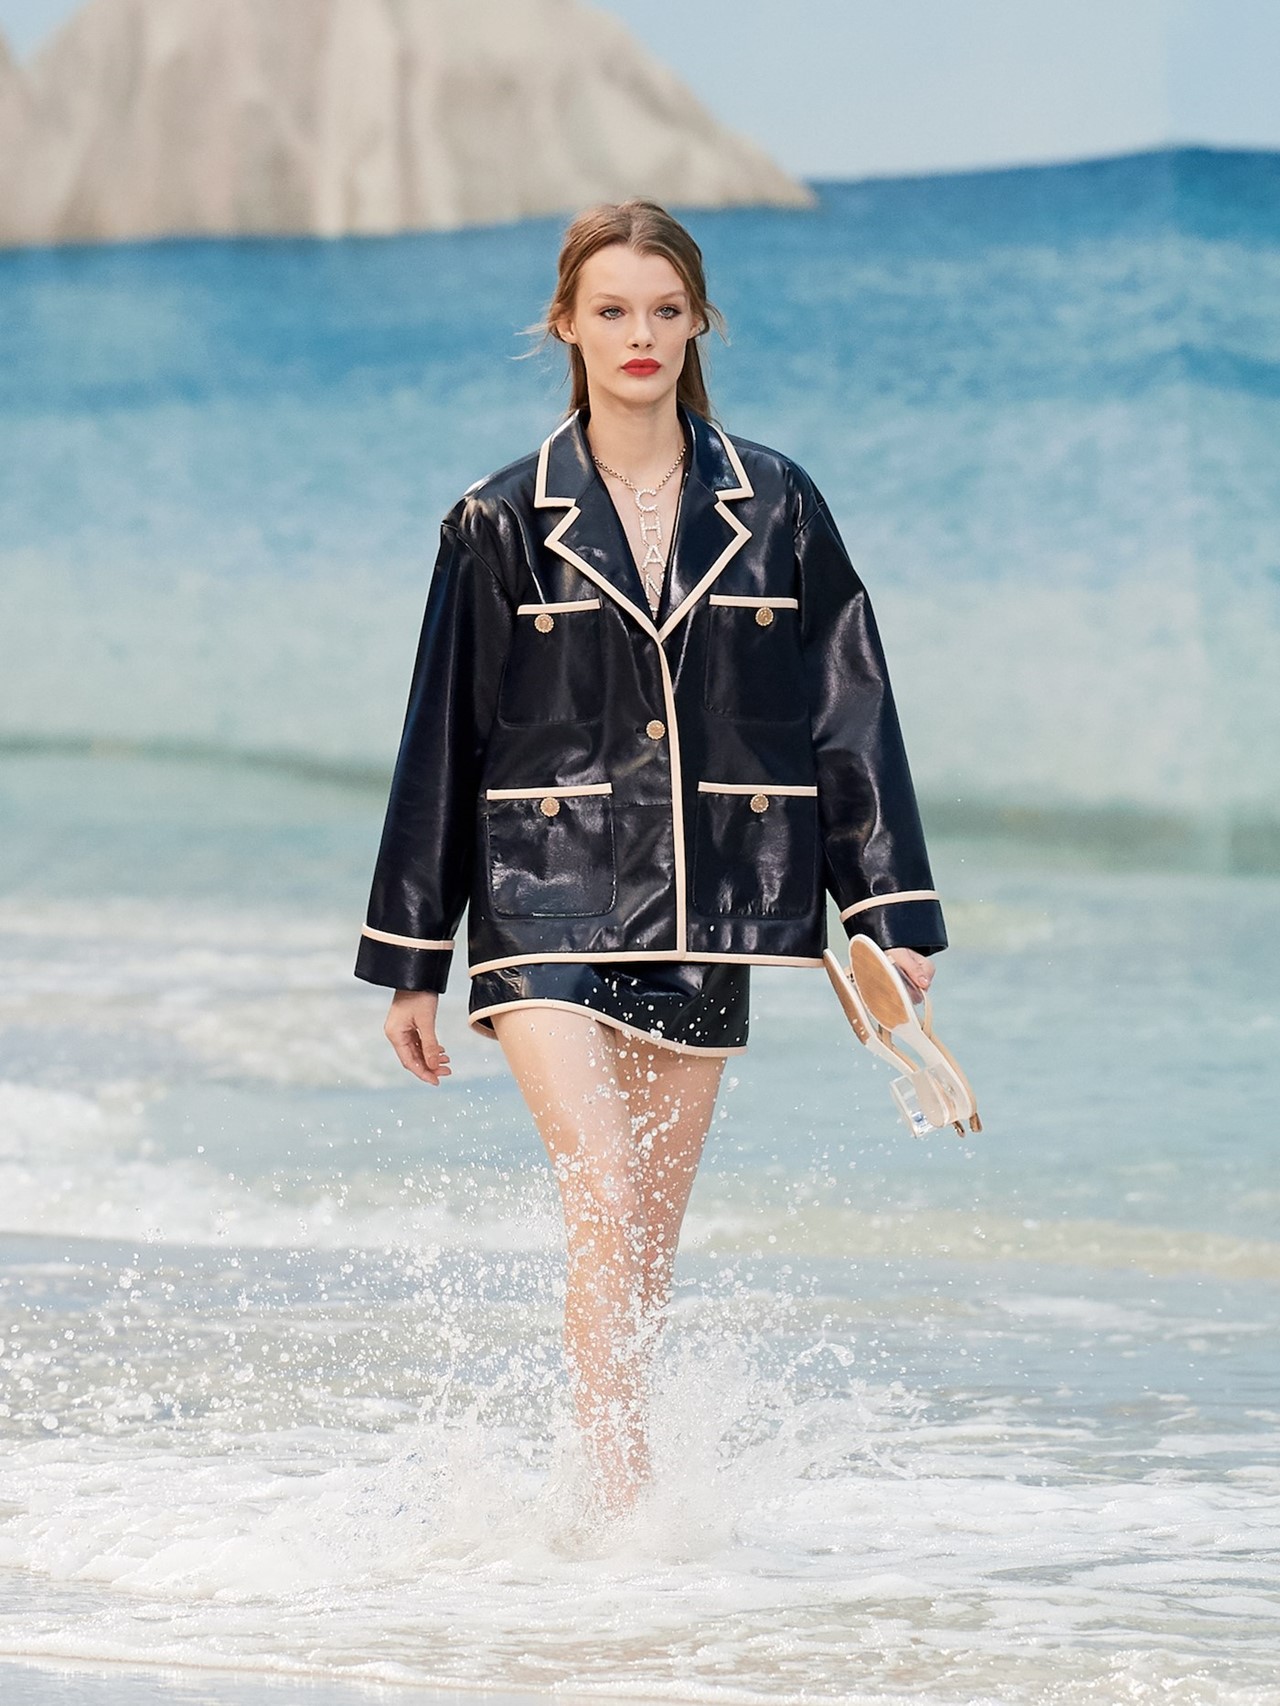 CHANEL by The Sea Spring 2019 Fashion Show @ Grand Palais Paris